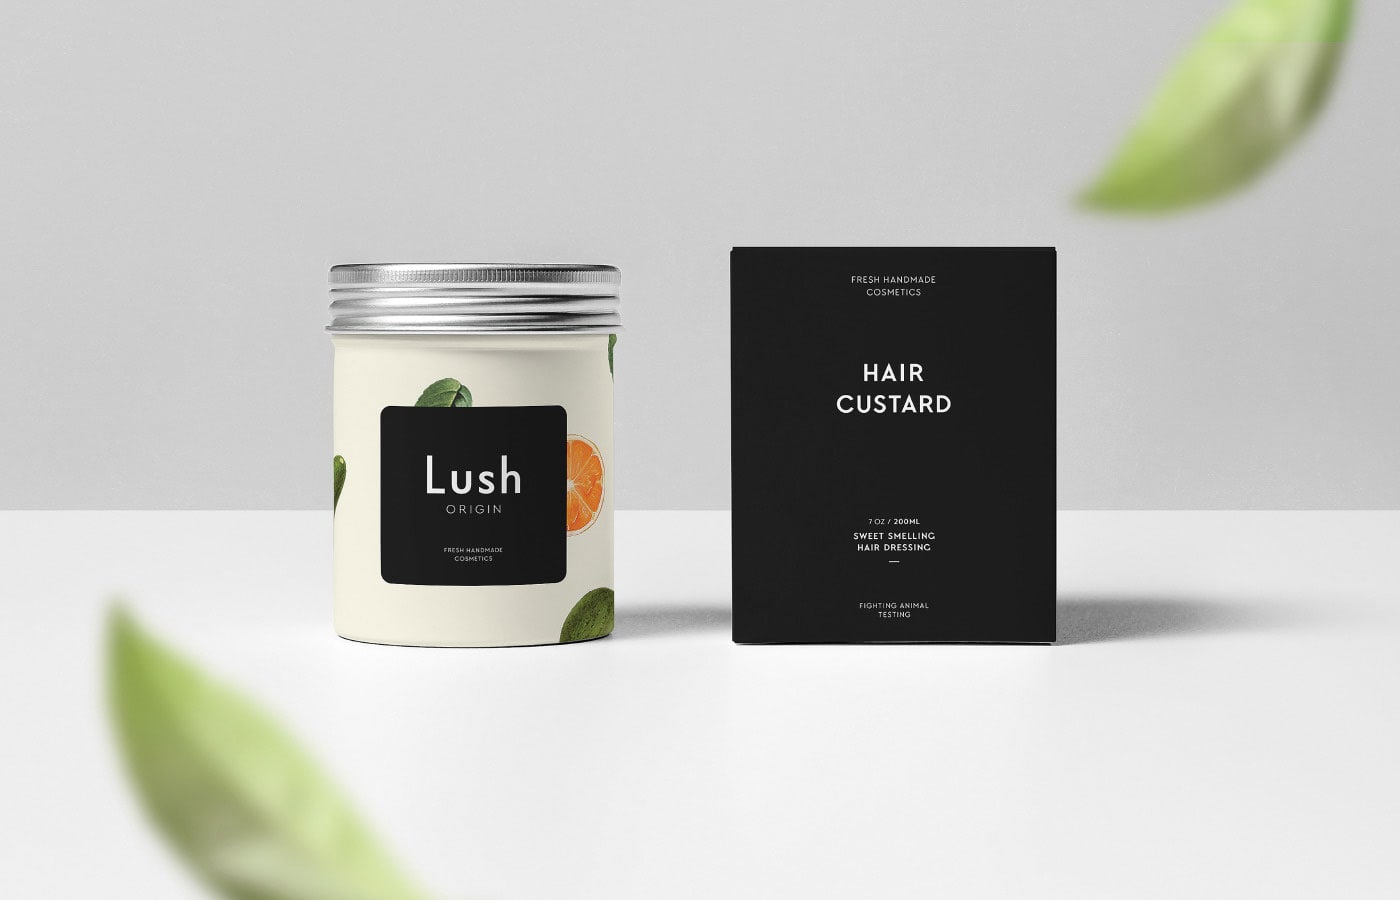 Lush Liquid沐浴品牌视觉设计欣赏